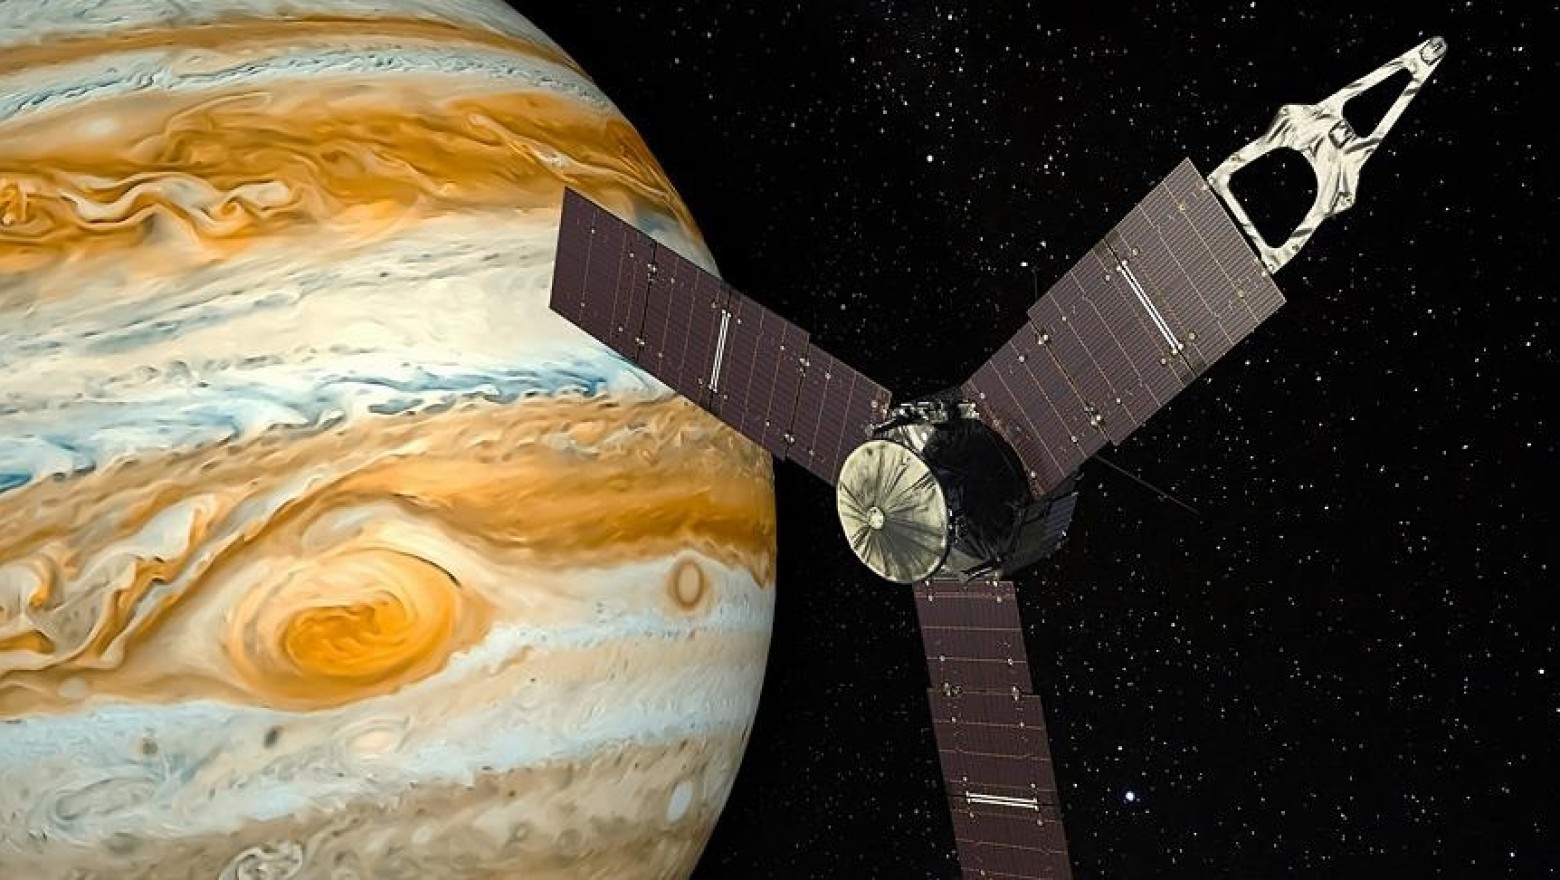 NASA Juno’nun faaliyet süresini uzattı